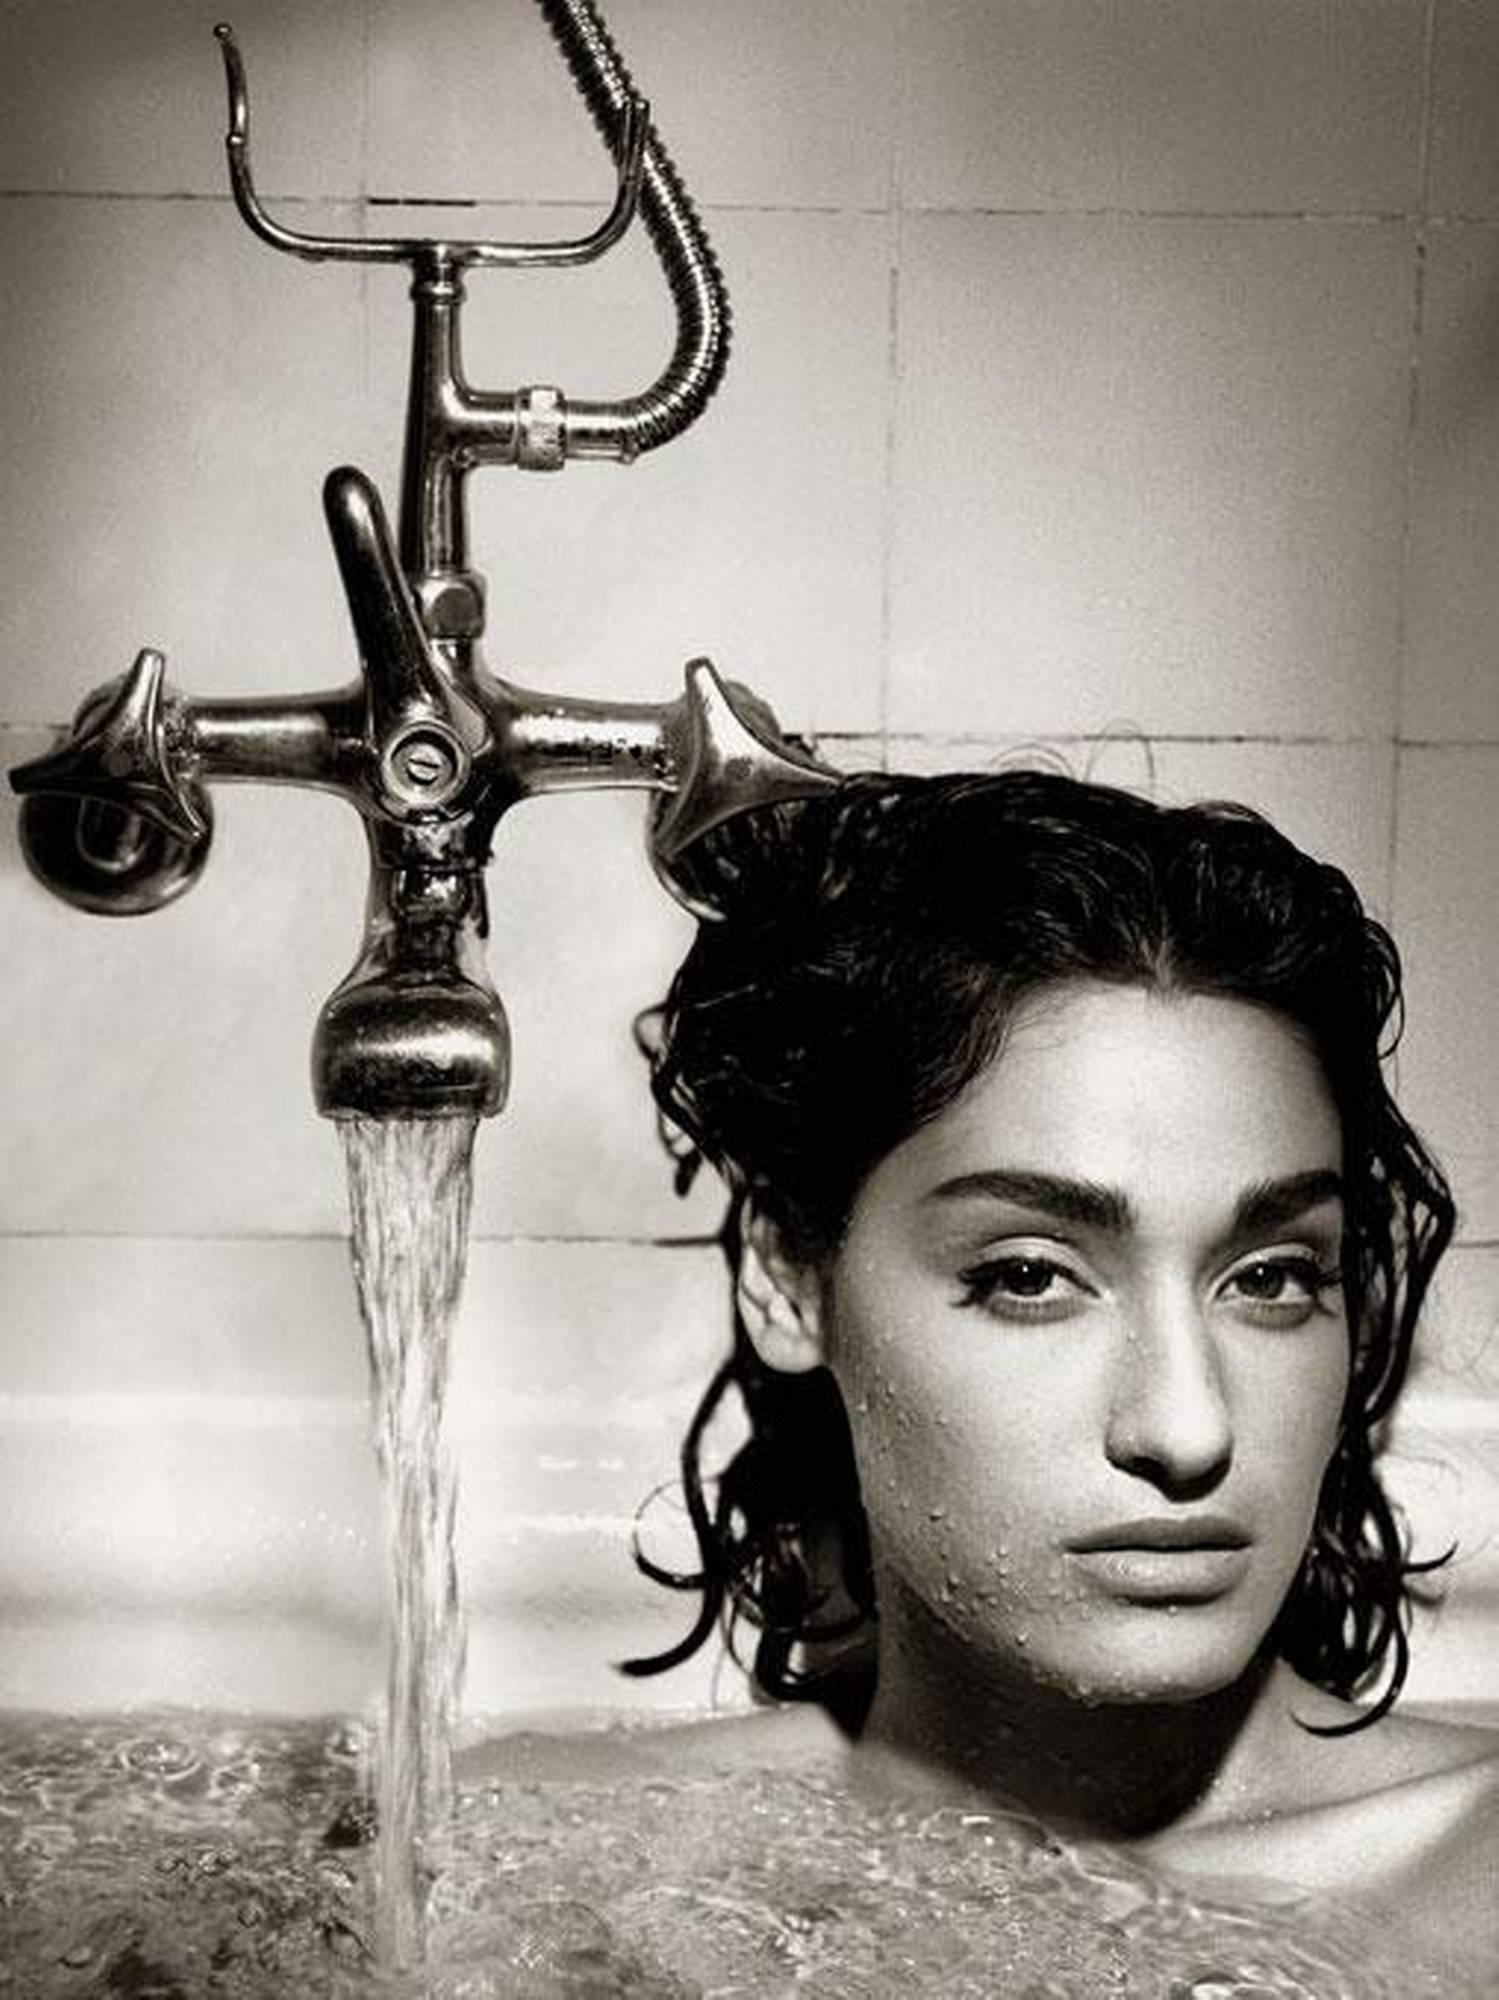 Albert Watson Black and White Photograph - Yvette, Berlin - portrait of the supermodel in a bathtub